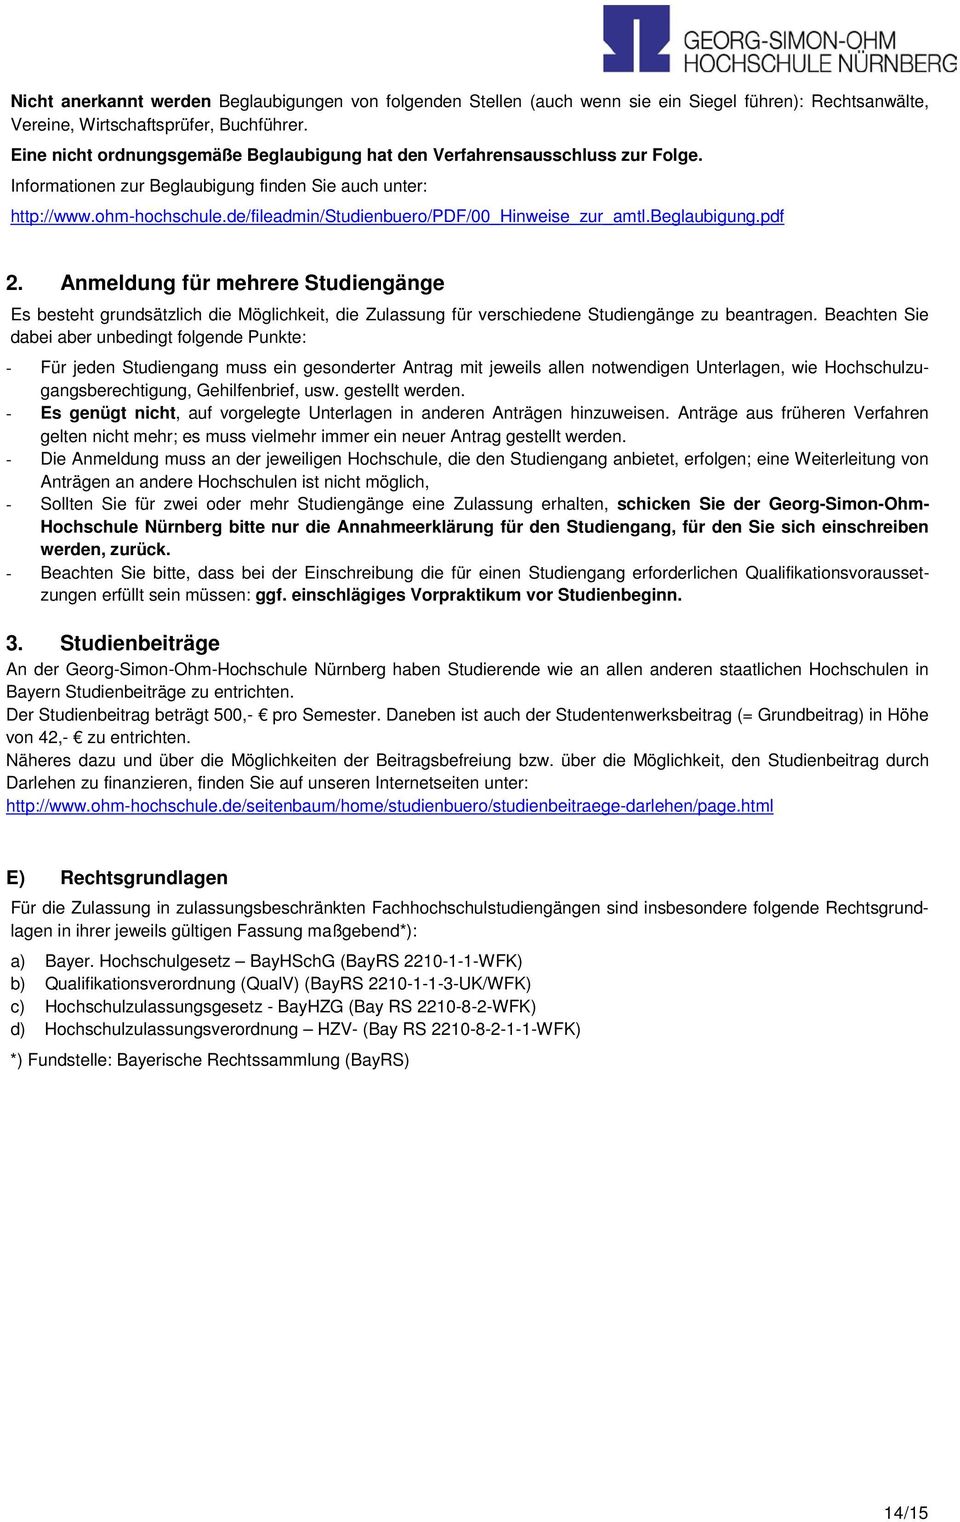 de/fileadmin/studienbuero/pdf/00_hinweise_zur_amtl.beglaubigung.pdf 2.